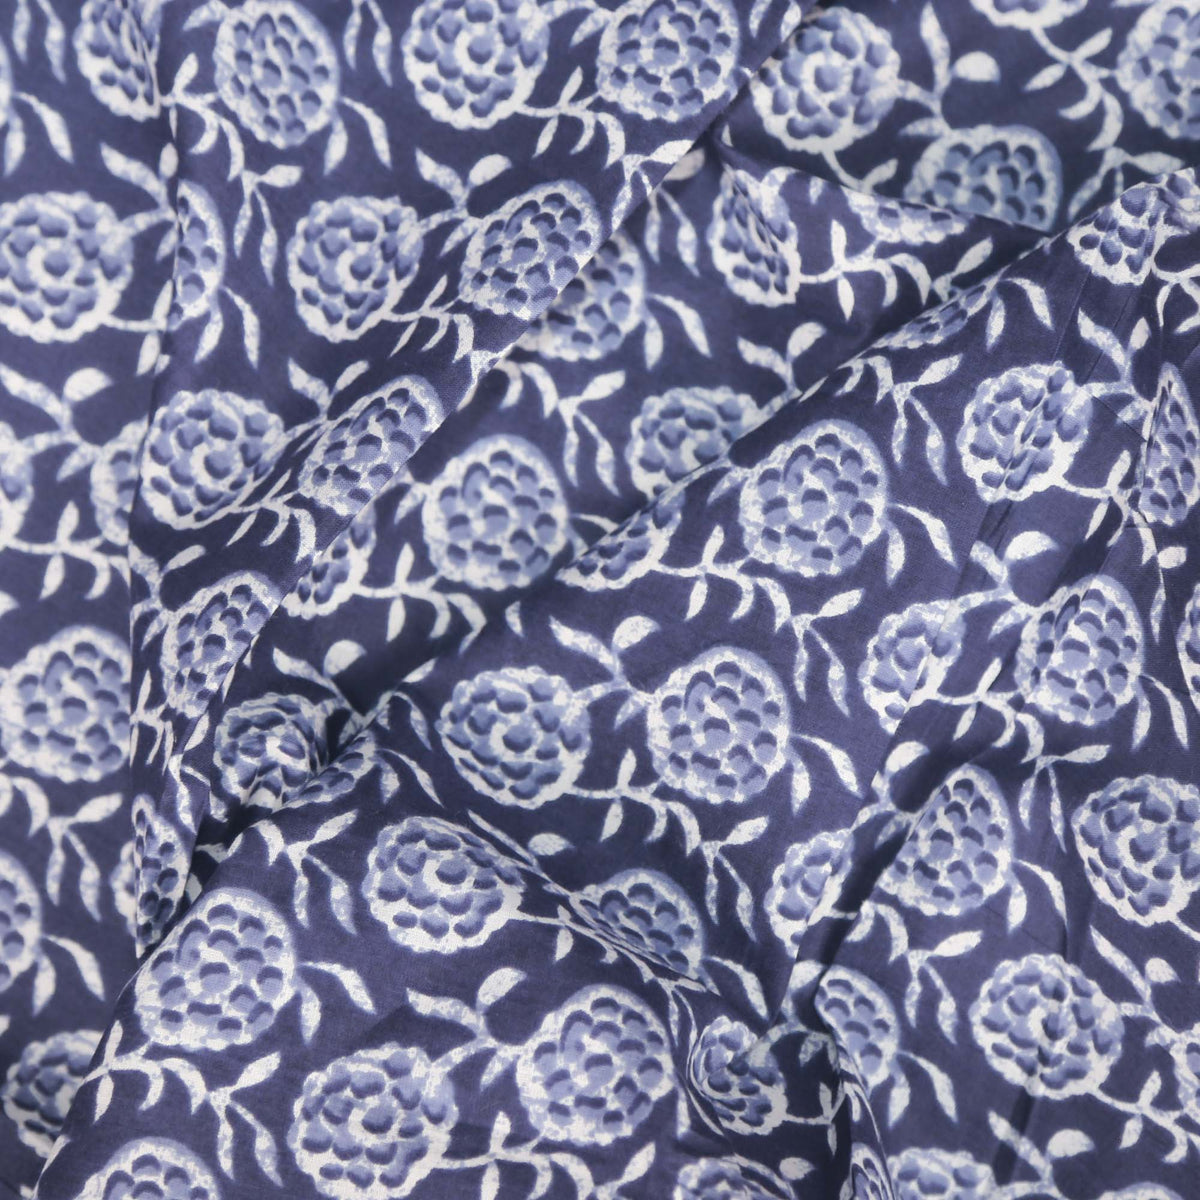 Block Printed 100% Cotton Women Dress Fabric Indigo Blue Wedgwood Flowers Design 432